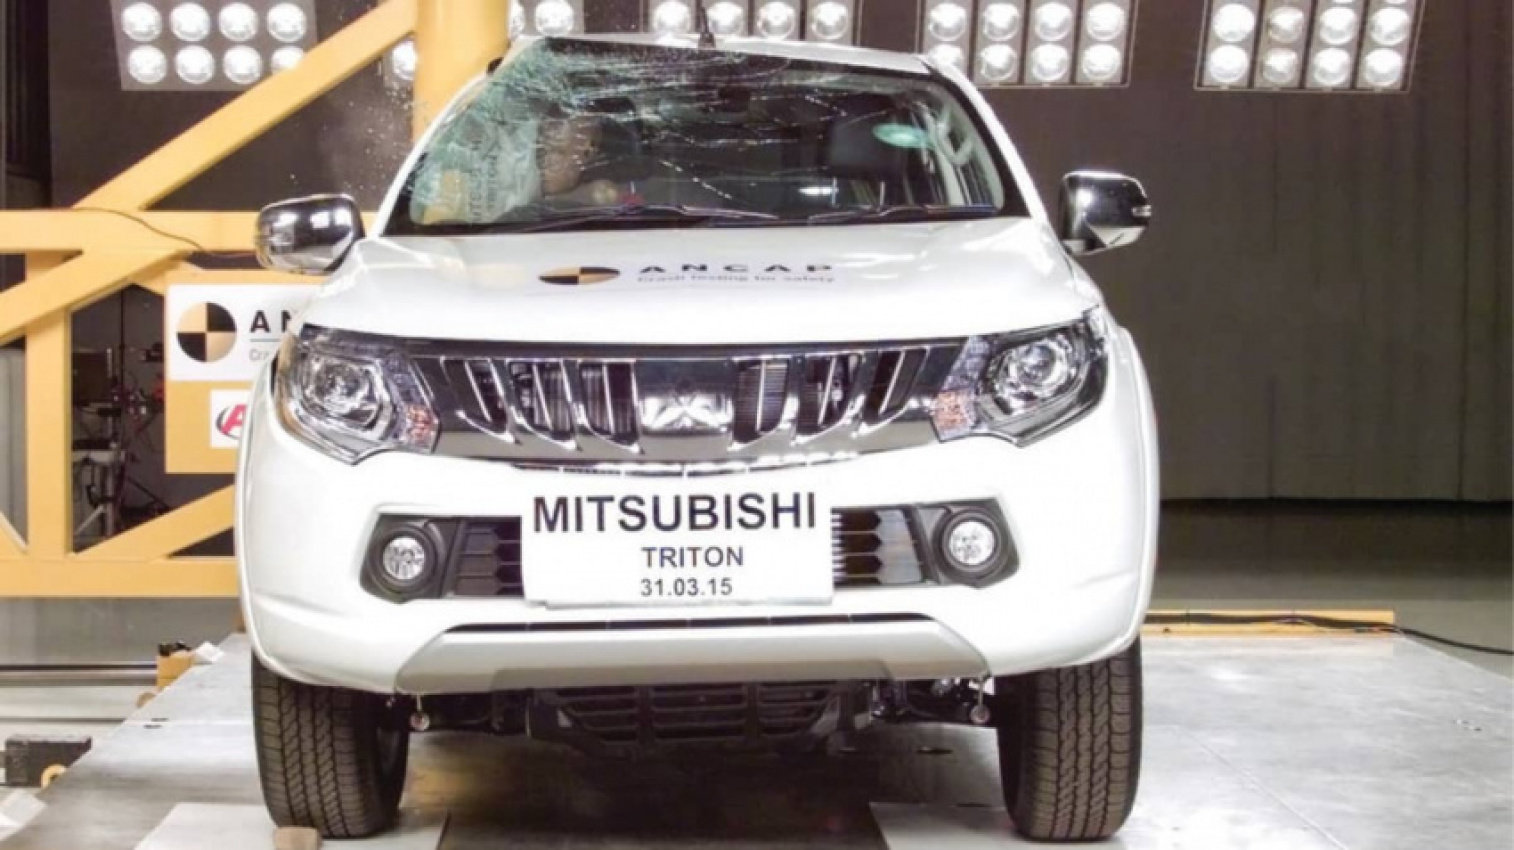 autos, cars, mitsubishi, mitsubishi triton, mitsubishi triton to stay on sale after safety rating expires, new model around the corner